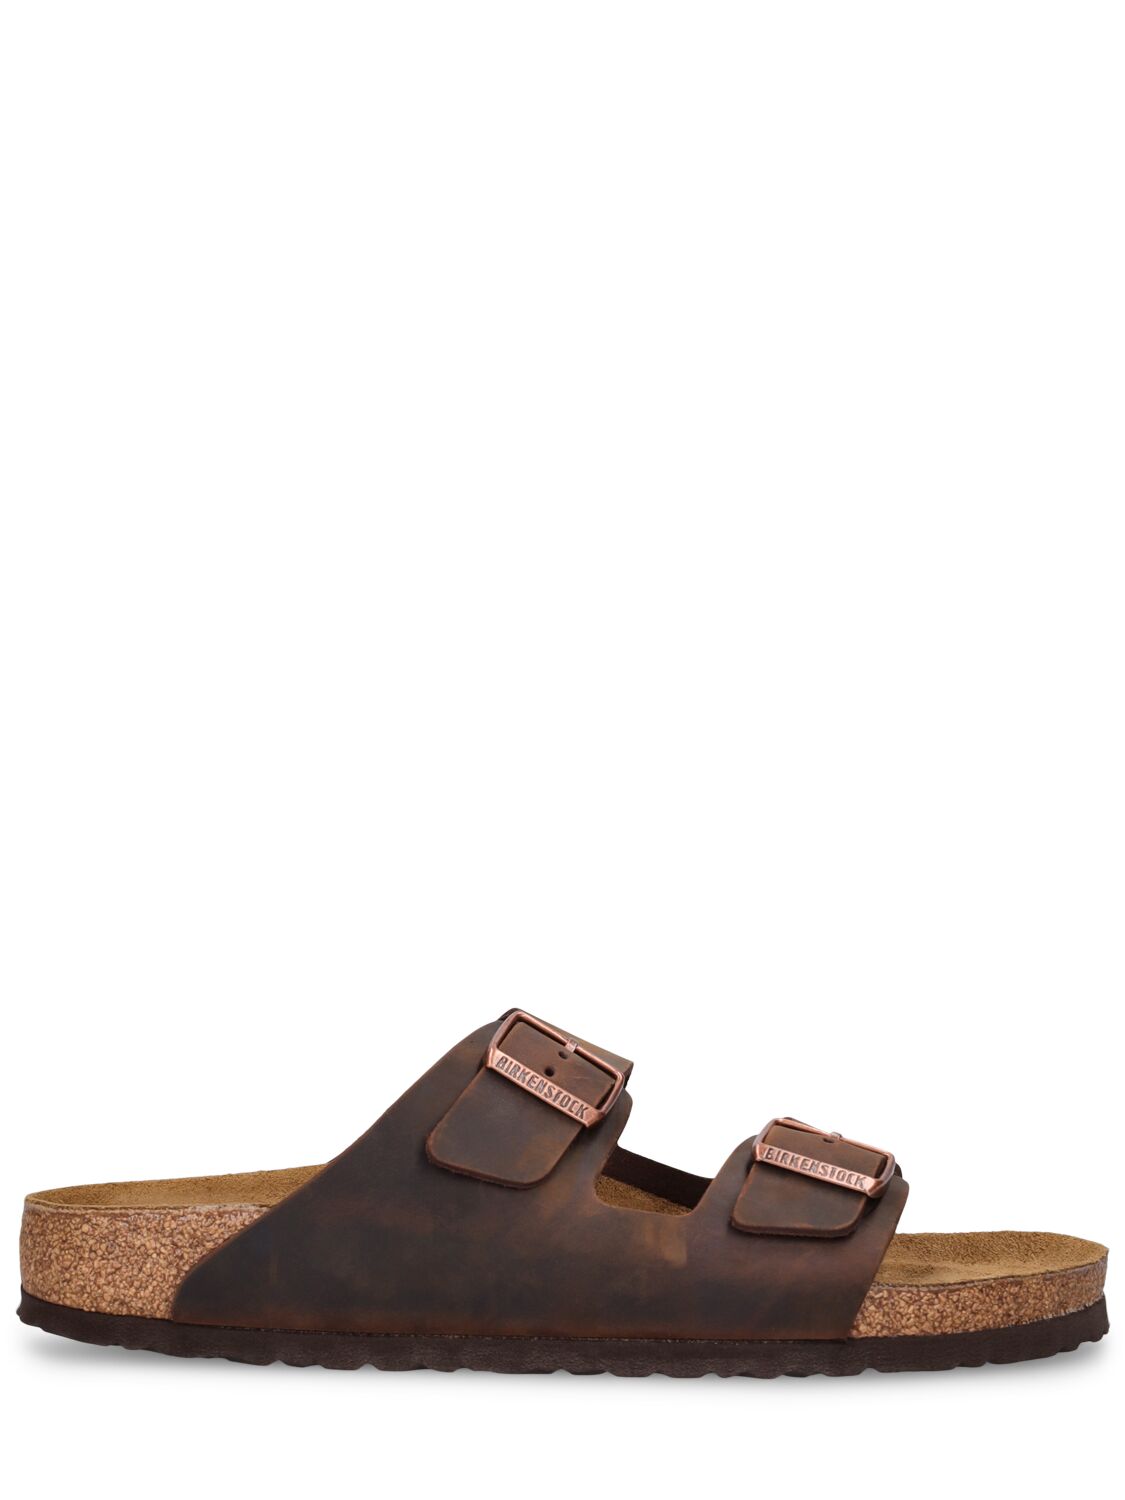 Birkenstock Arizona Oiled Leather Sandals In Brown